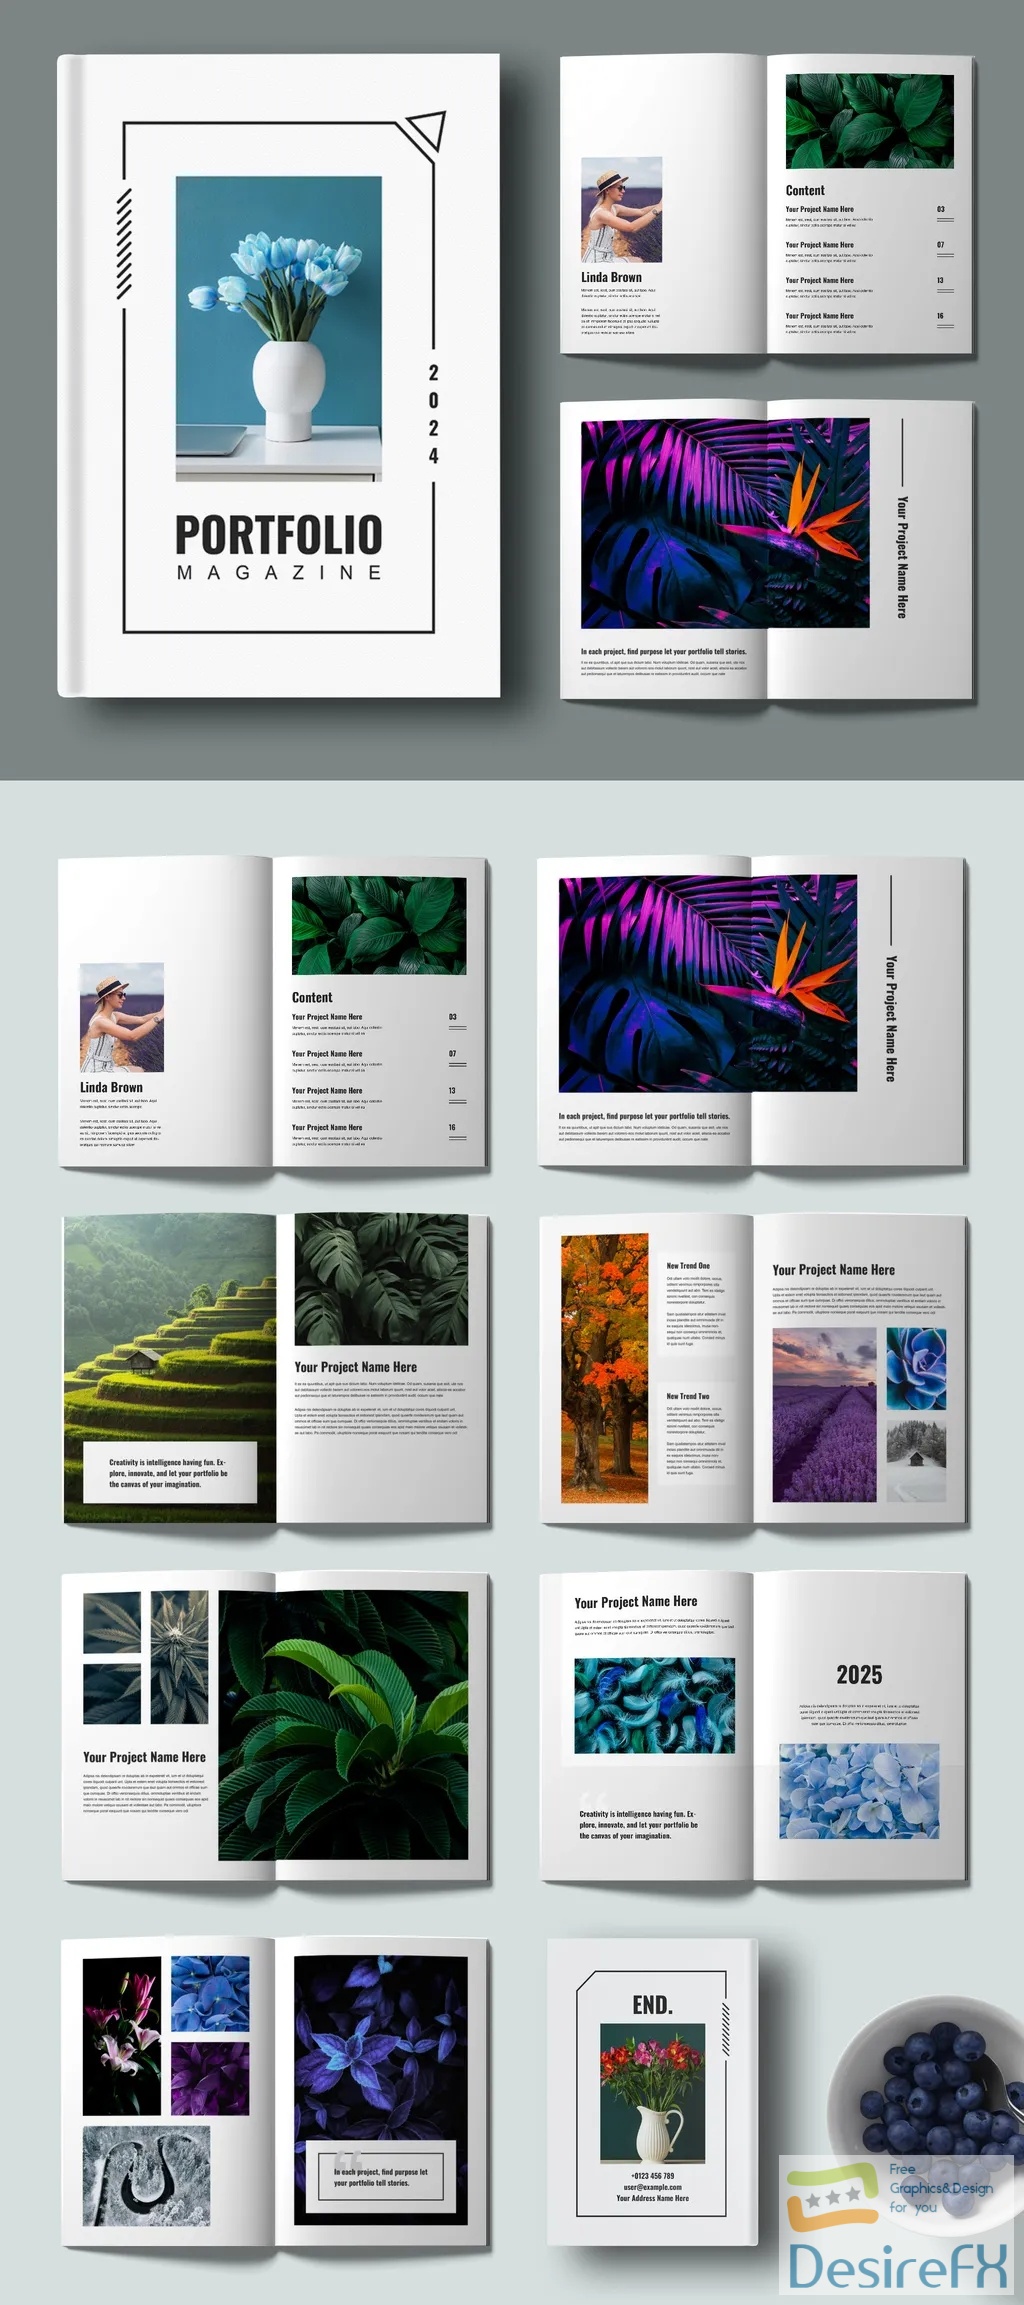 Adobestock - Minimal Portfolio Magazine Design 718538333